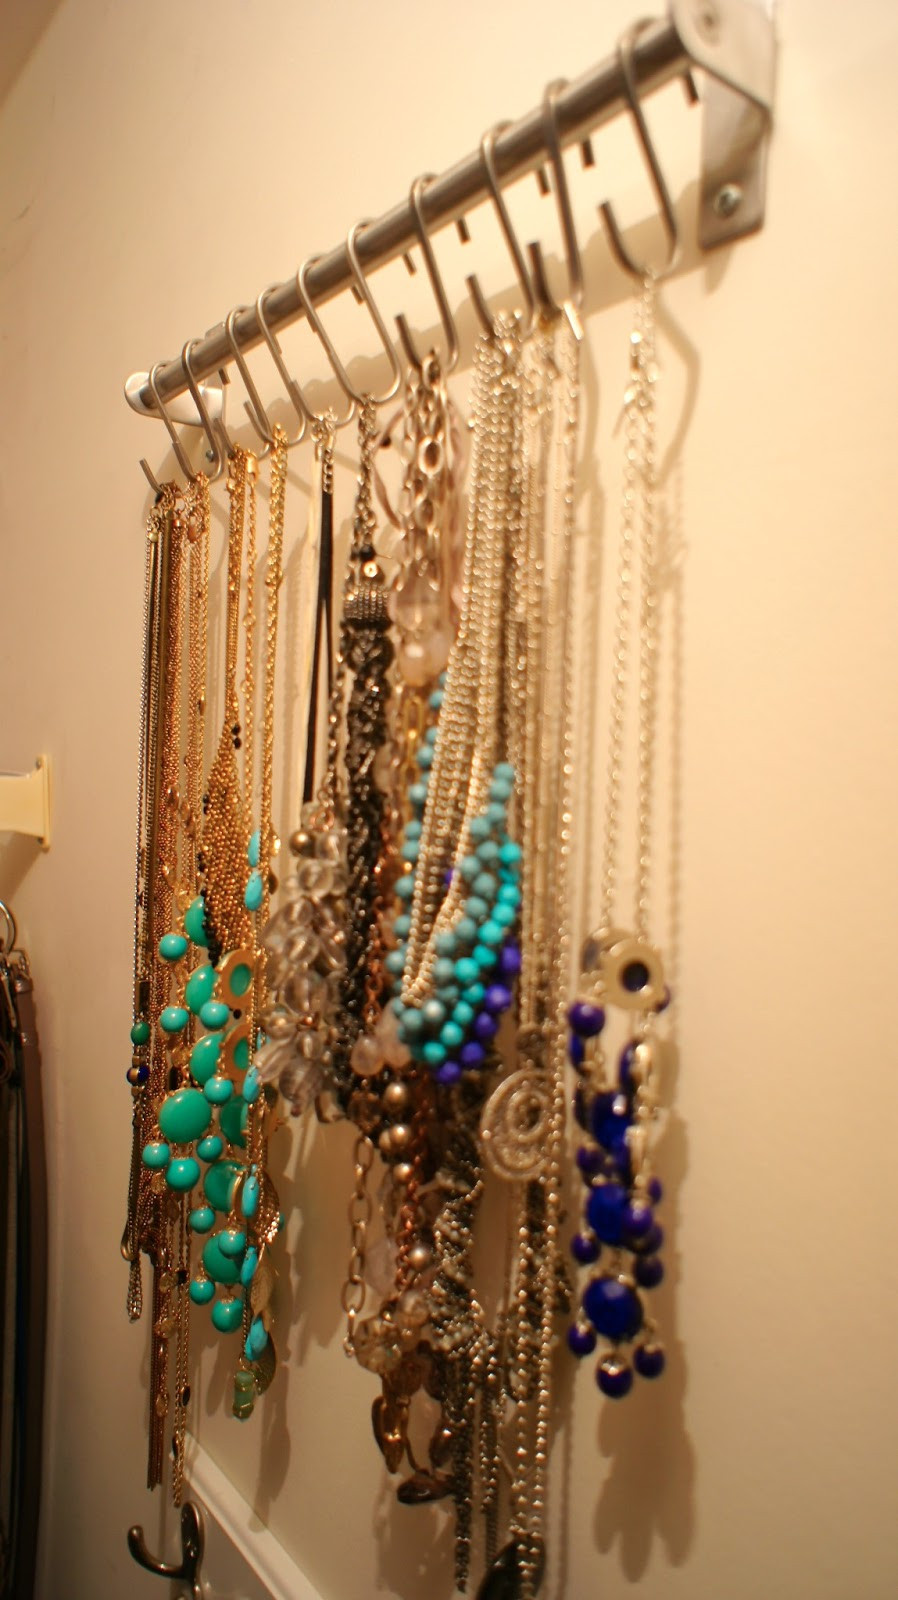 DIY Jewelry Hanger Organizer
 Food Fashion Home Necklace Organizer System